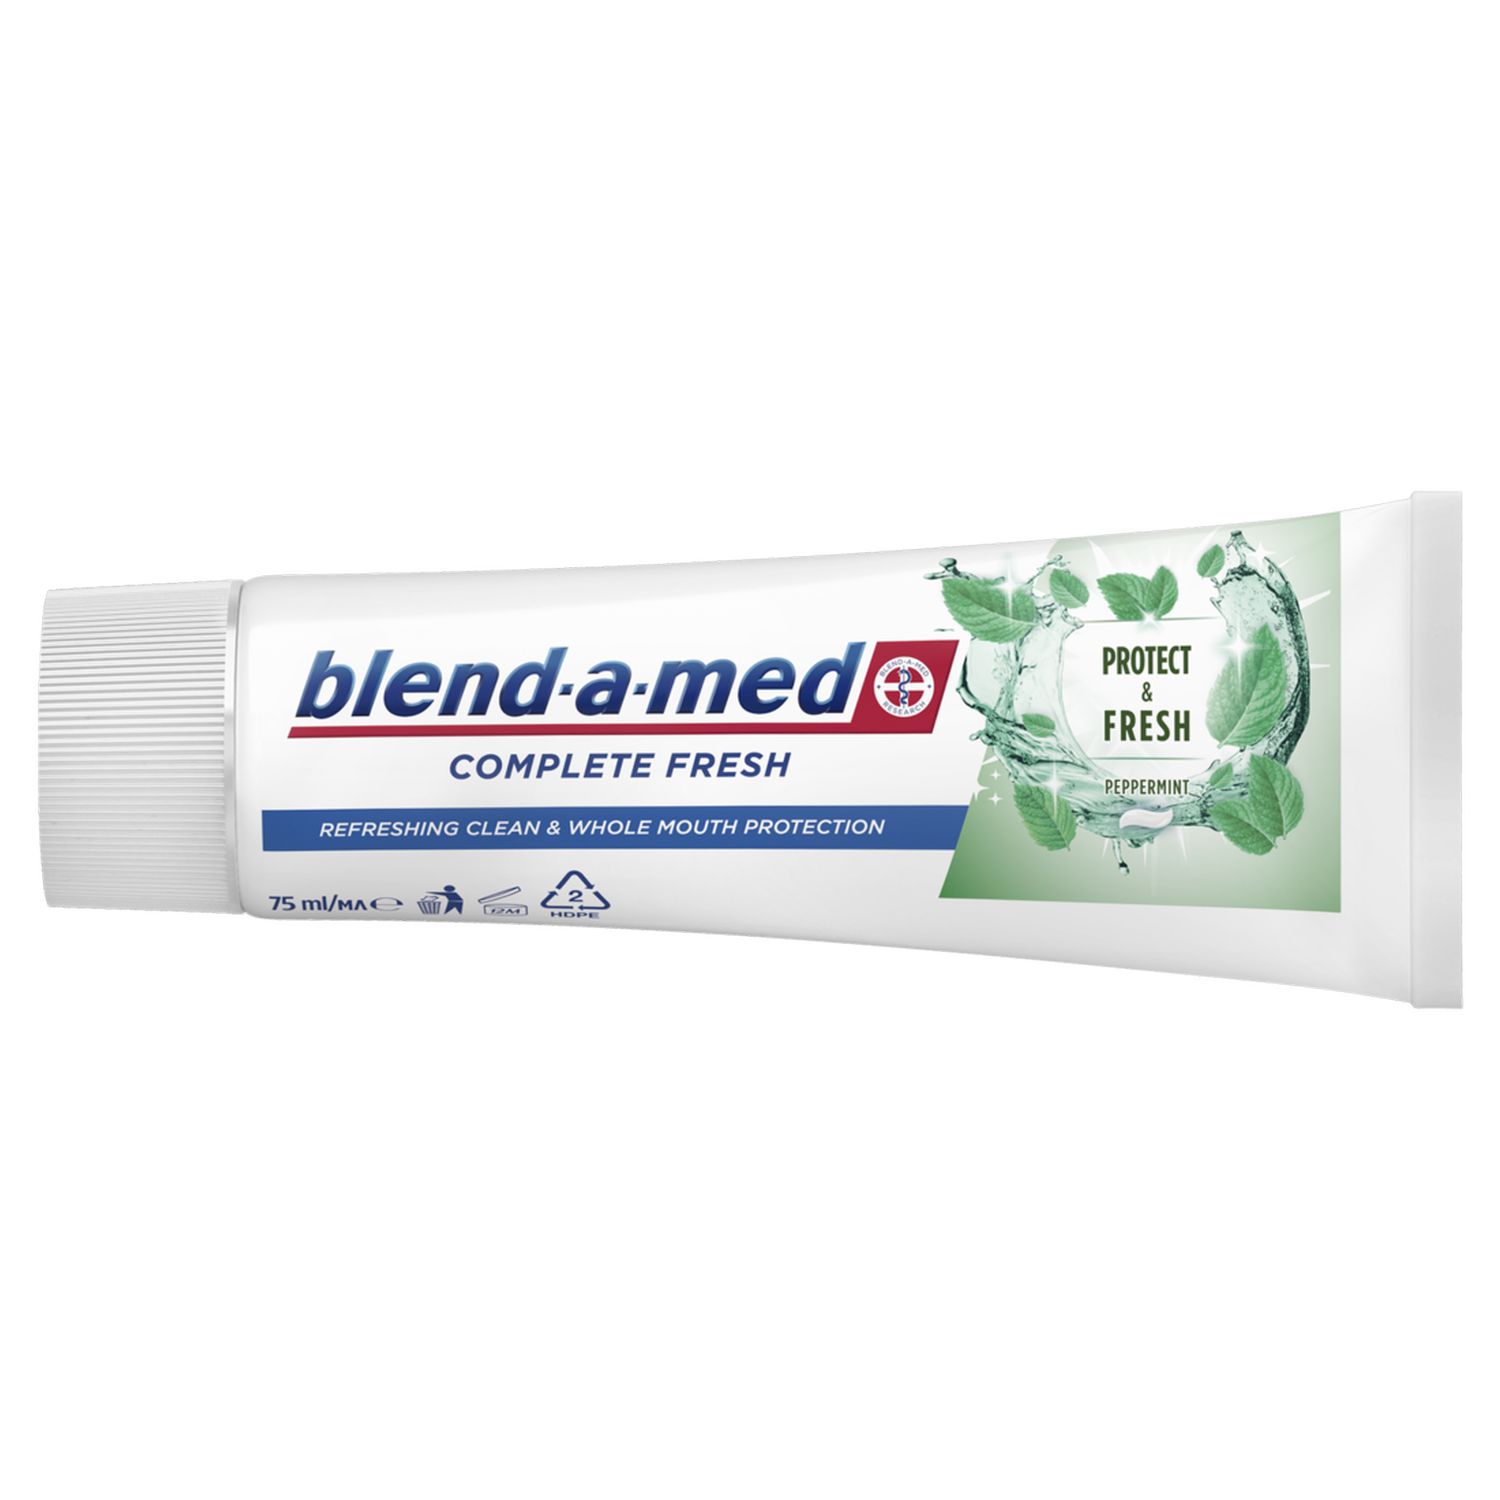 Зубная паста Blend-a-med Complete Fresh Защита и свежесть 75 мл - фото 2